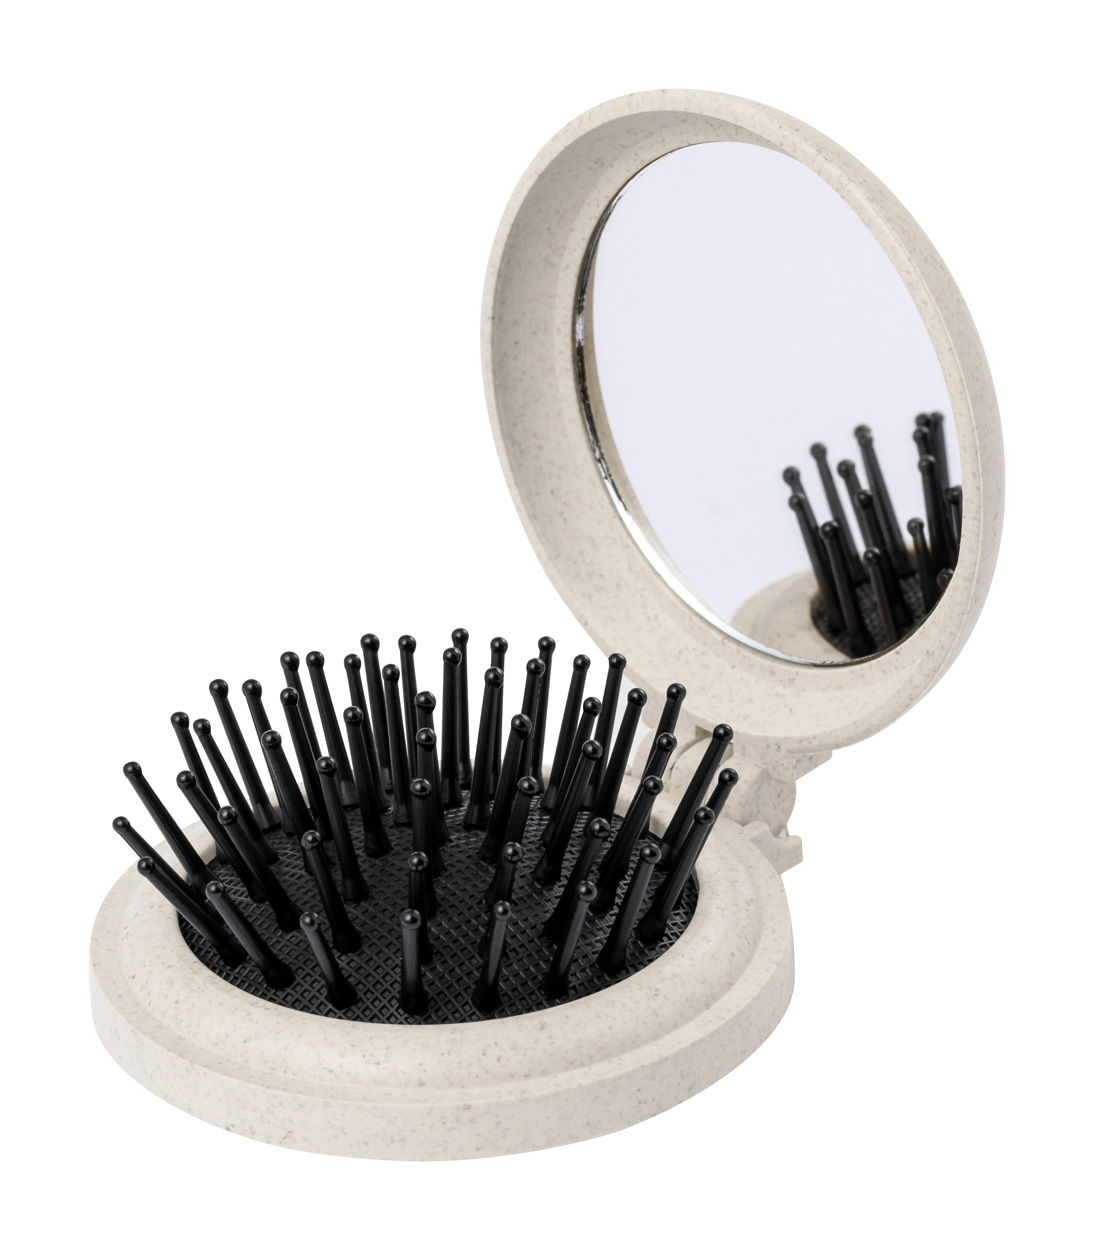 Flege hair brush - Beige